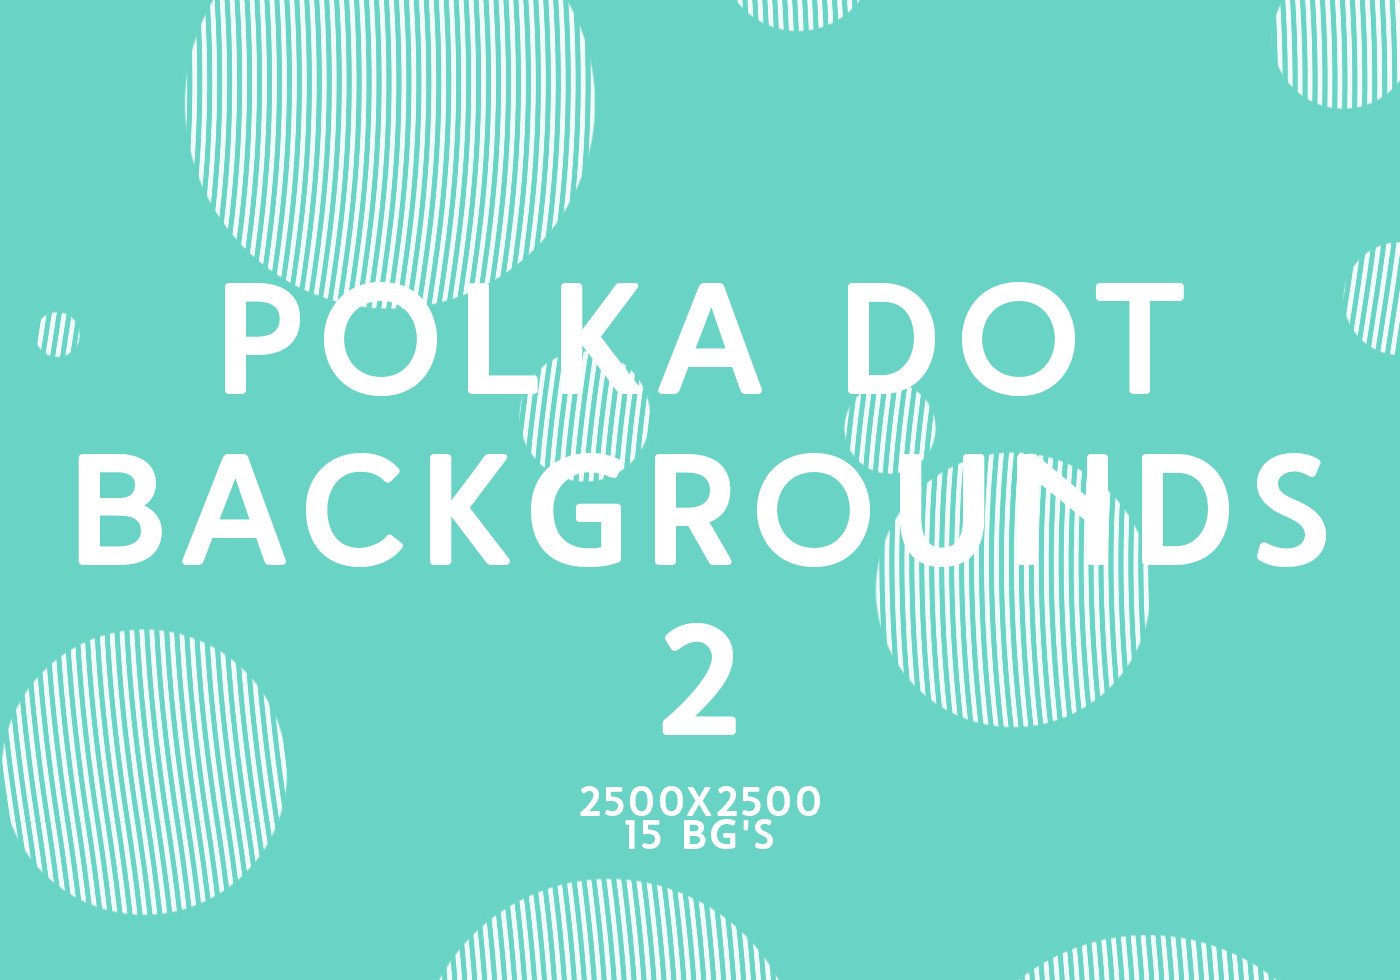 Polka Dot Backgrounds 2 Free shop Brushes at Brusheezy